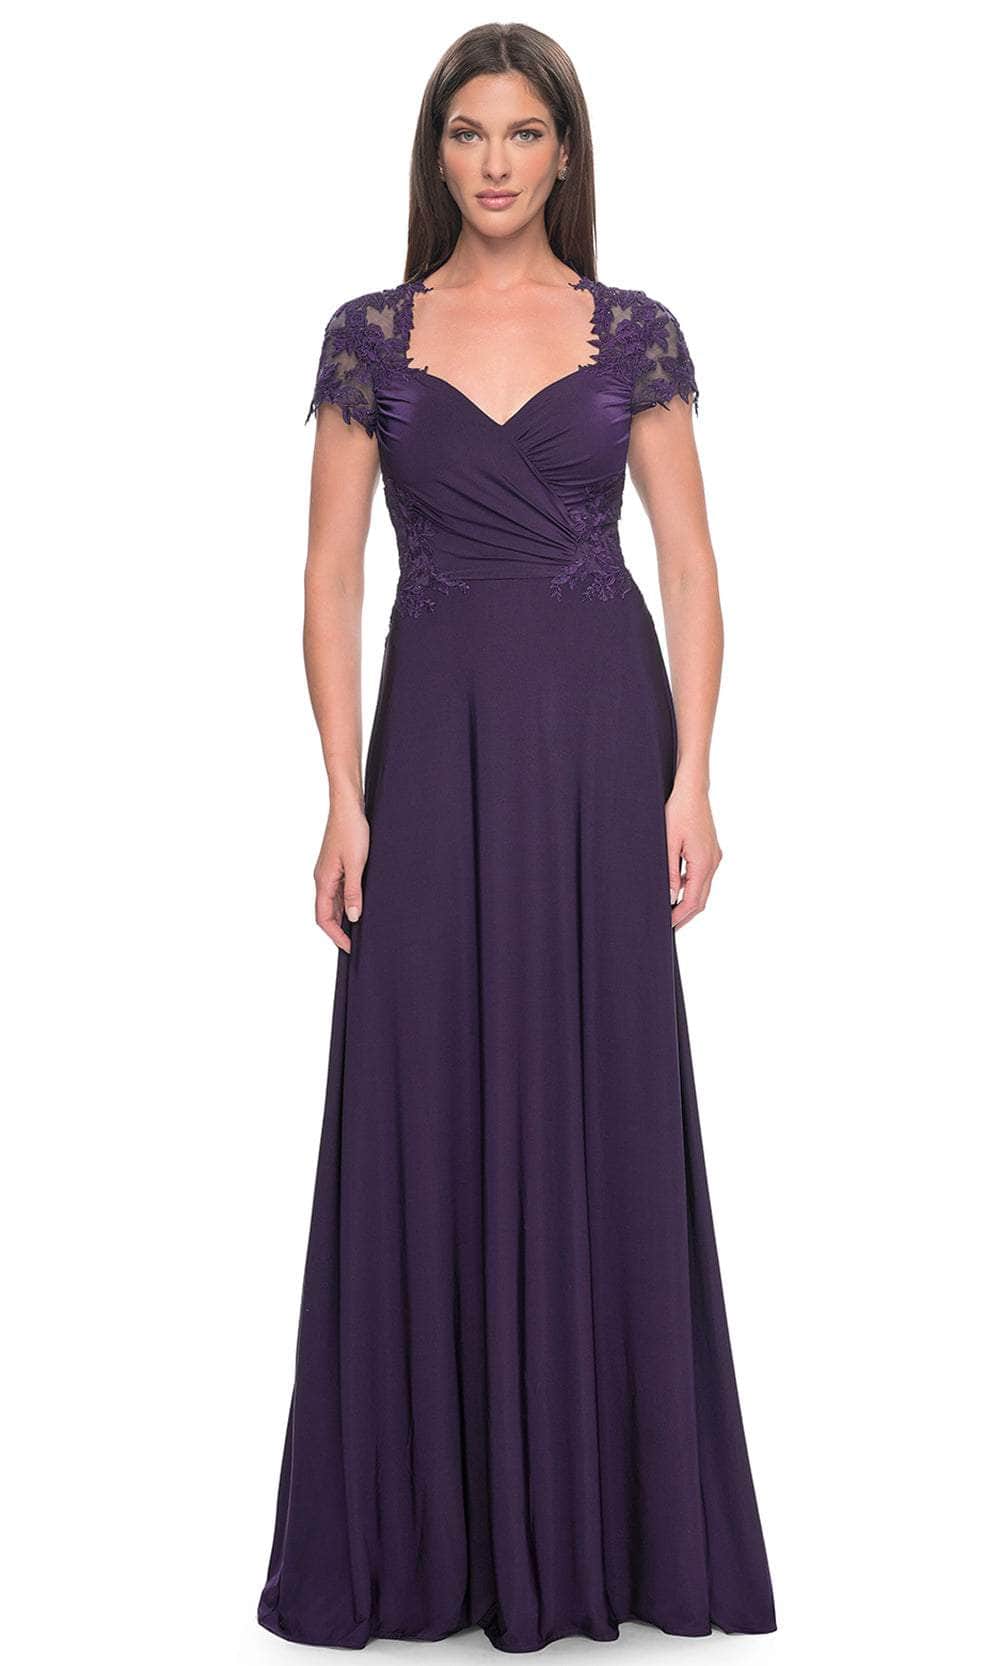 La Femme 31906 - Fitted A-Line Formal Dress Mother of the Bride Dresses 4 / Eggplant